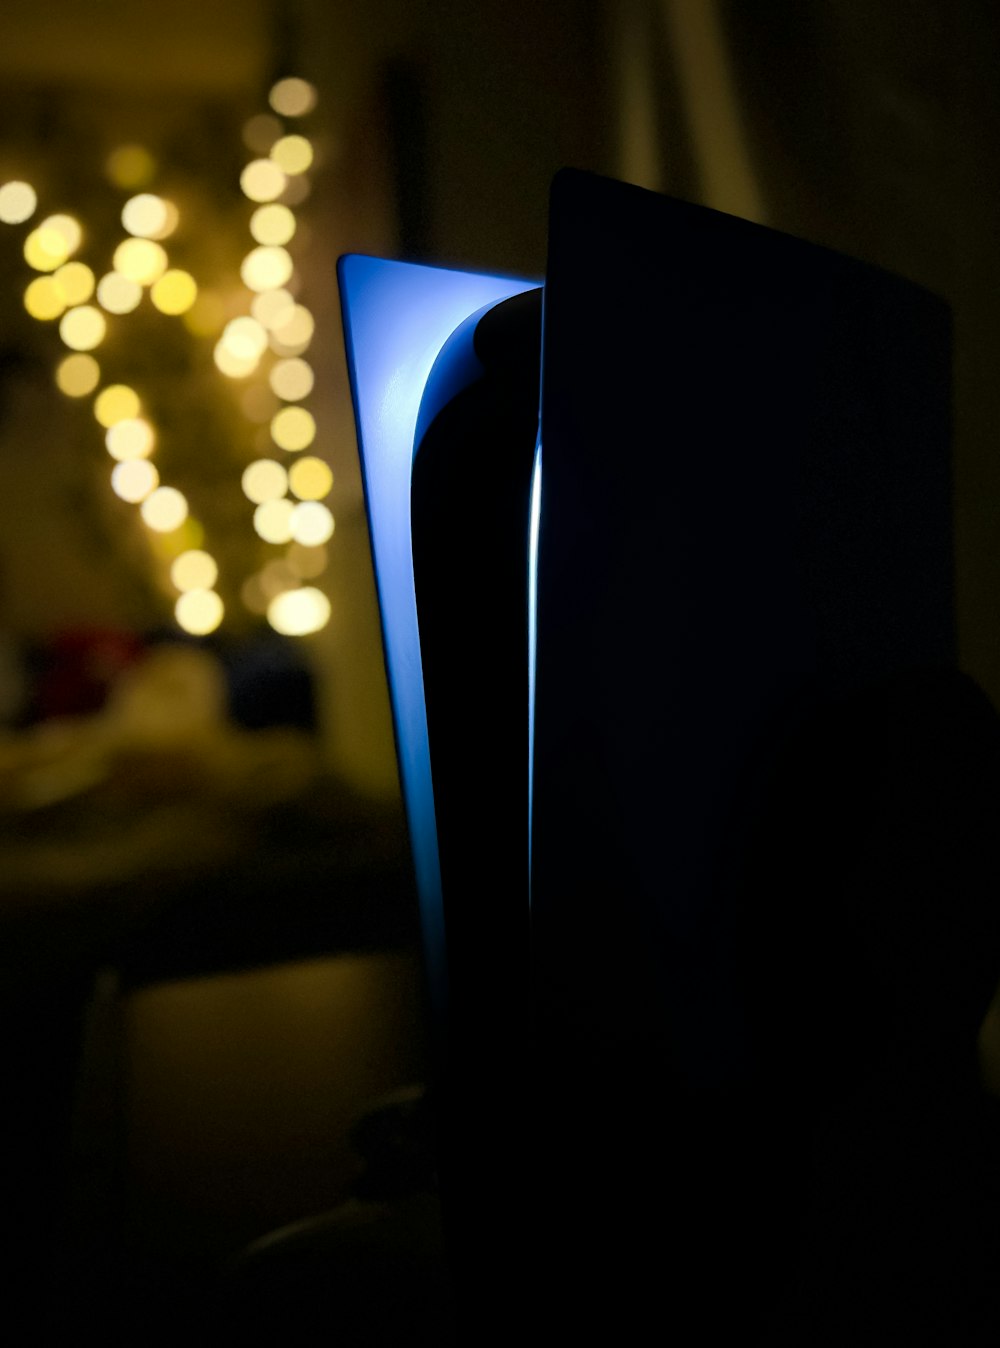 a close up of a blue light in a dark room